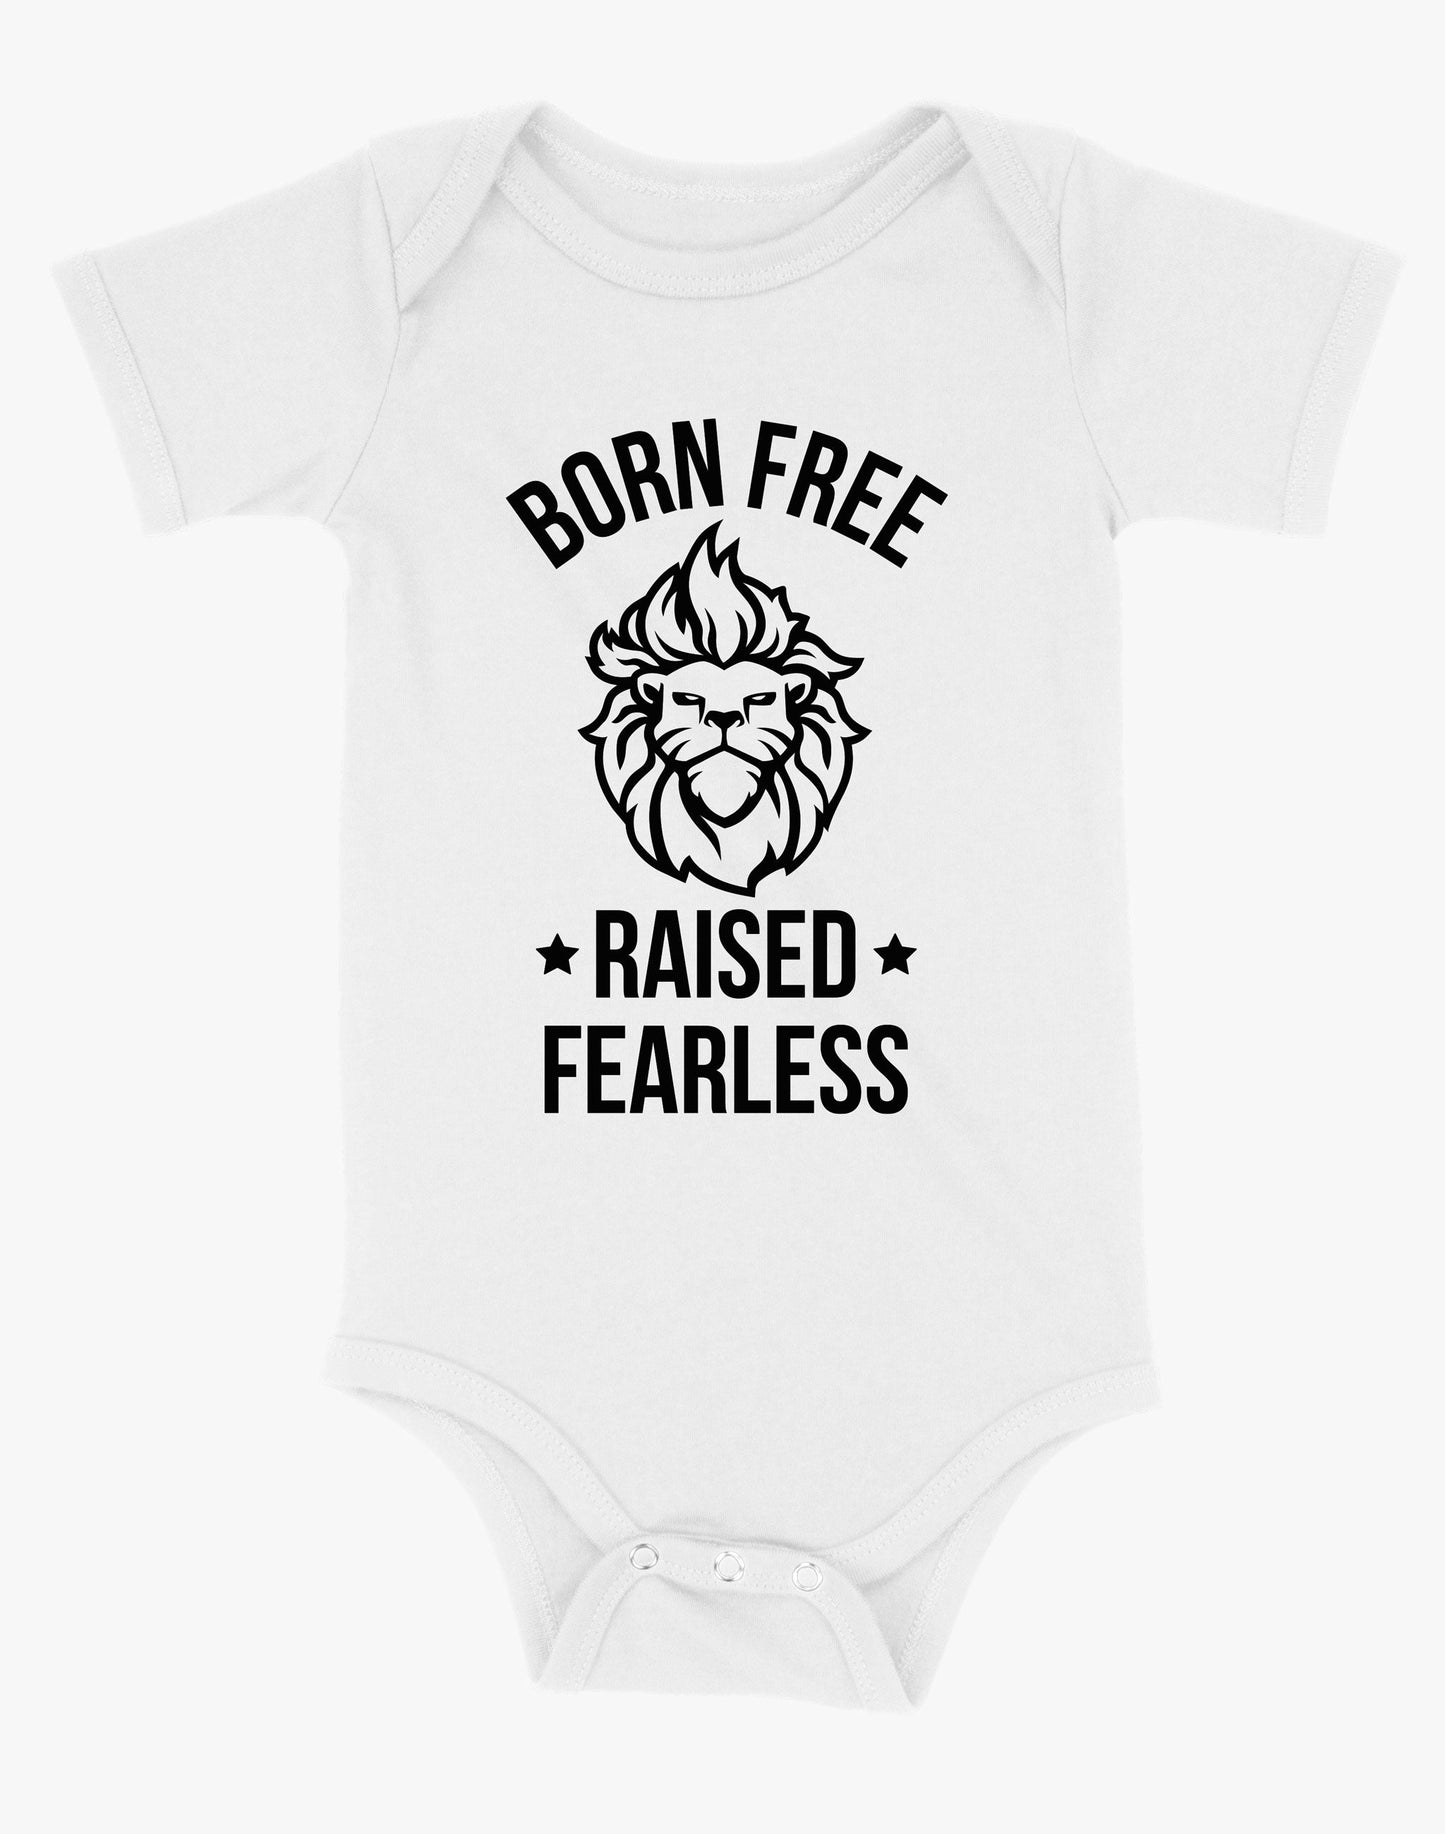 Baby Born Free Raised Fearless Onsie - White